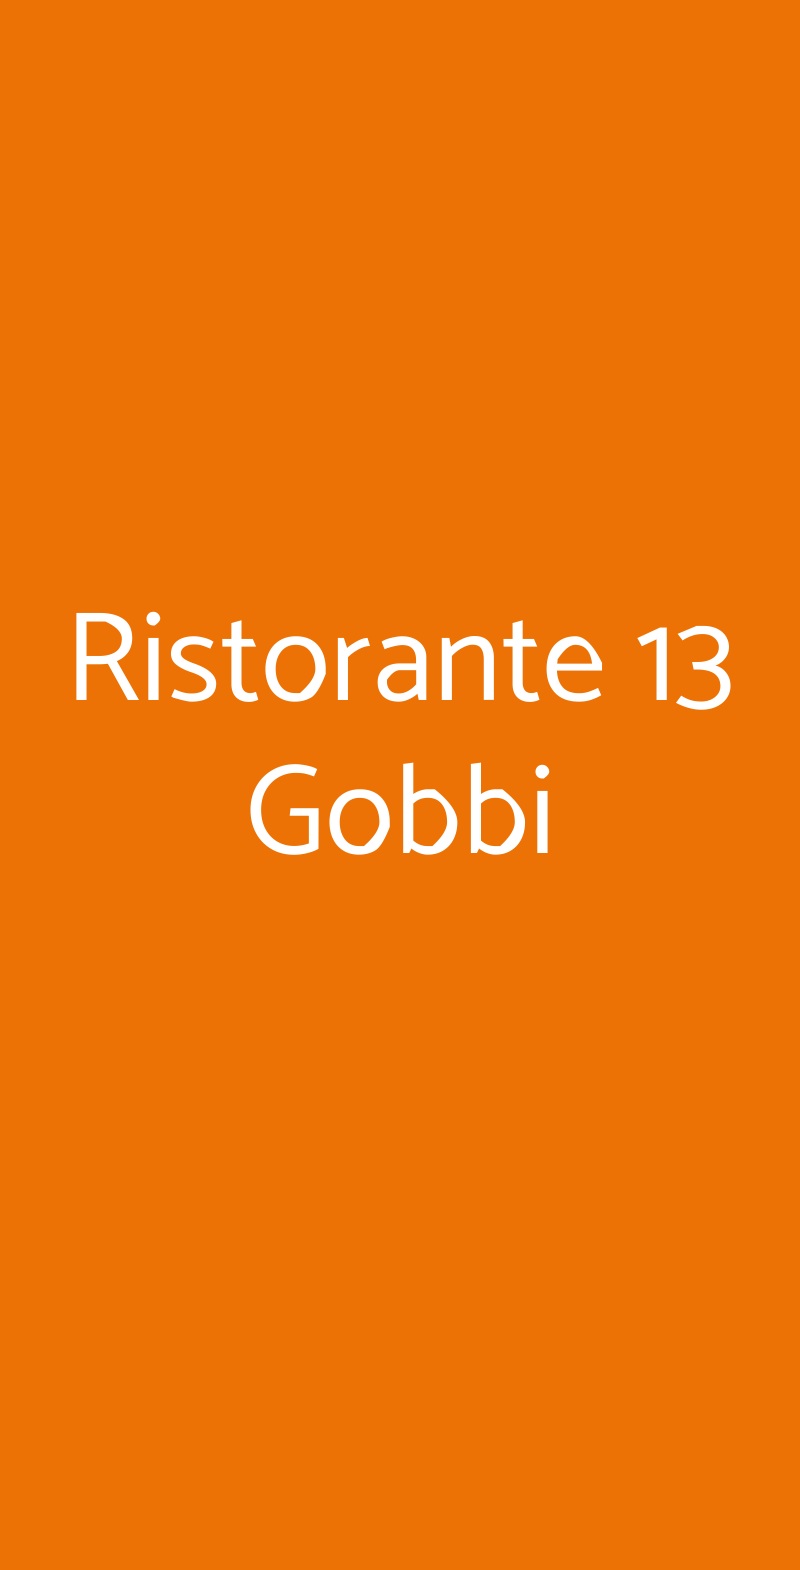 Ristorante 13 Gobbi Torrita di Siena menù 1 pagina